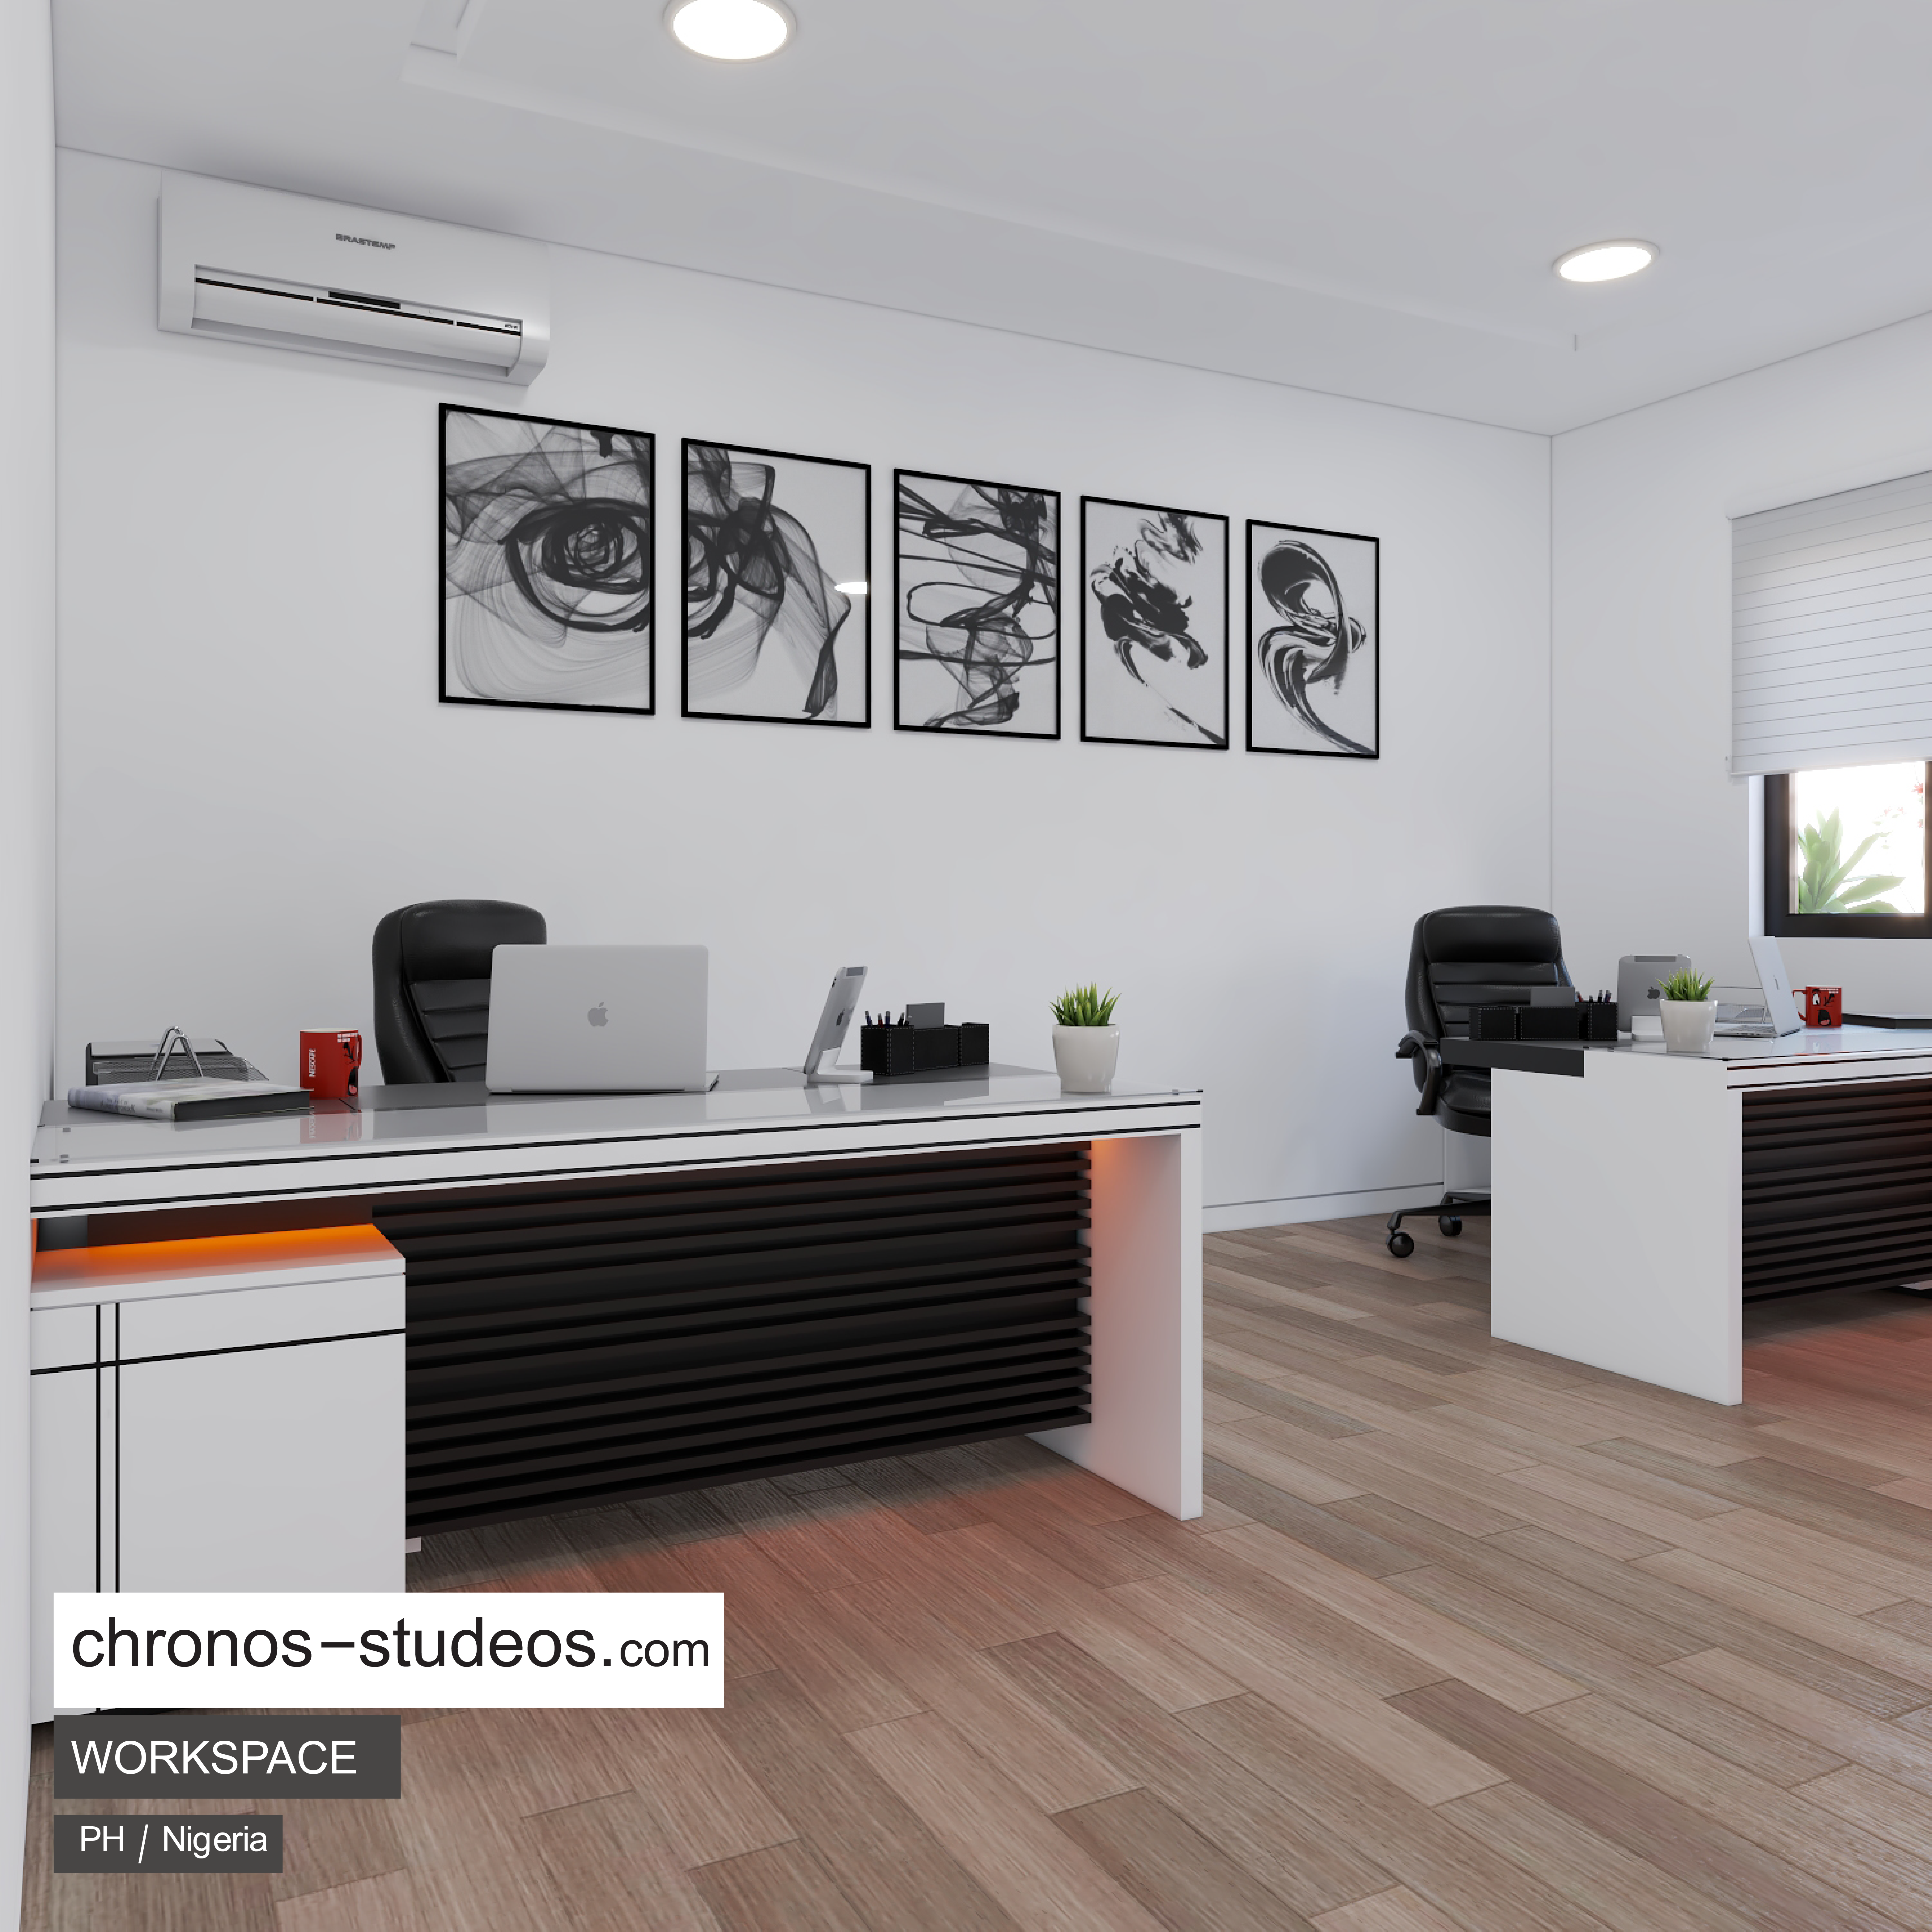 office-interior-design-chronos-studeos-architects